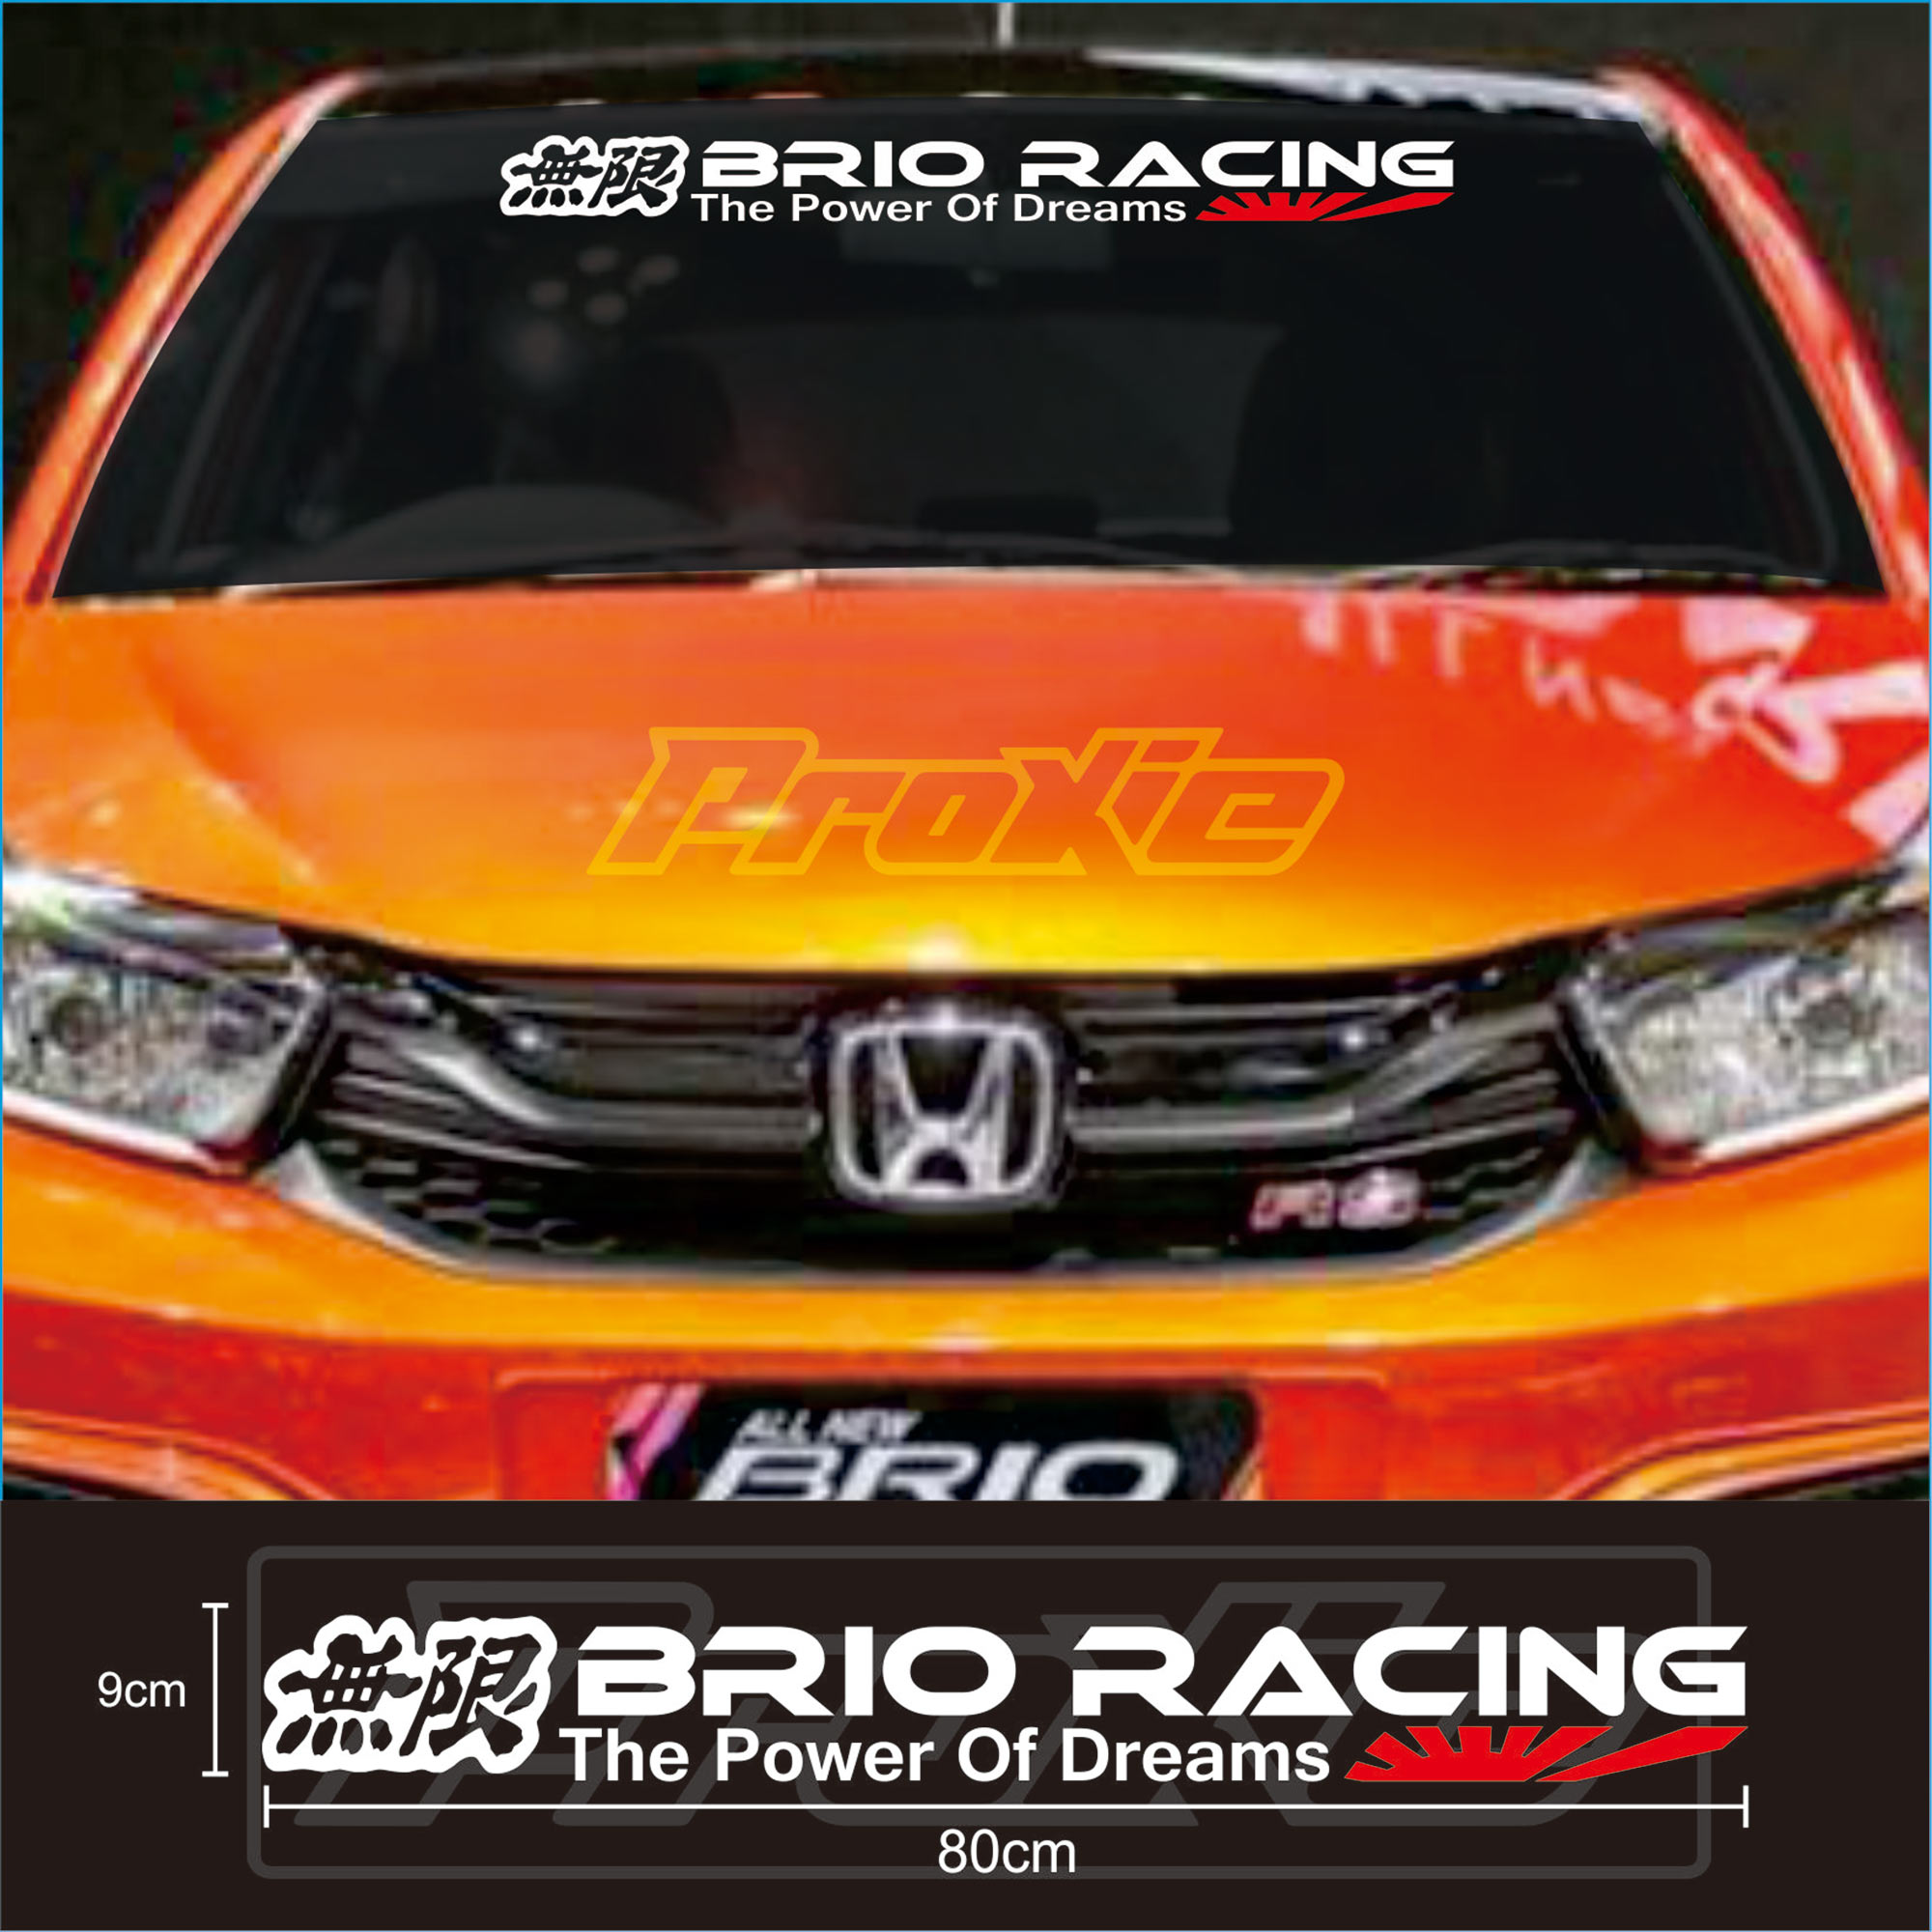 Cutting Sticker Mobil BRIO RACING Terbaru Promosi Keren Murah Lazada Indonesia